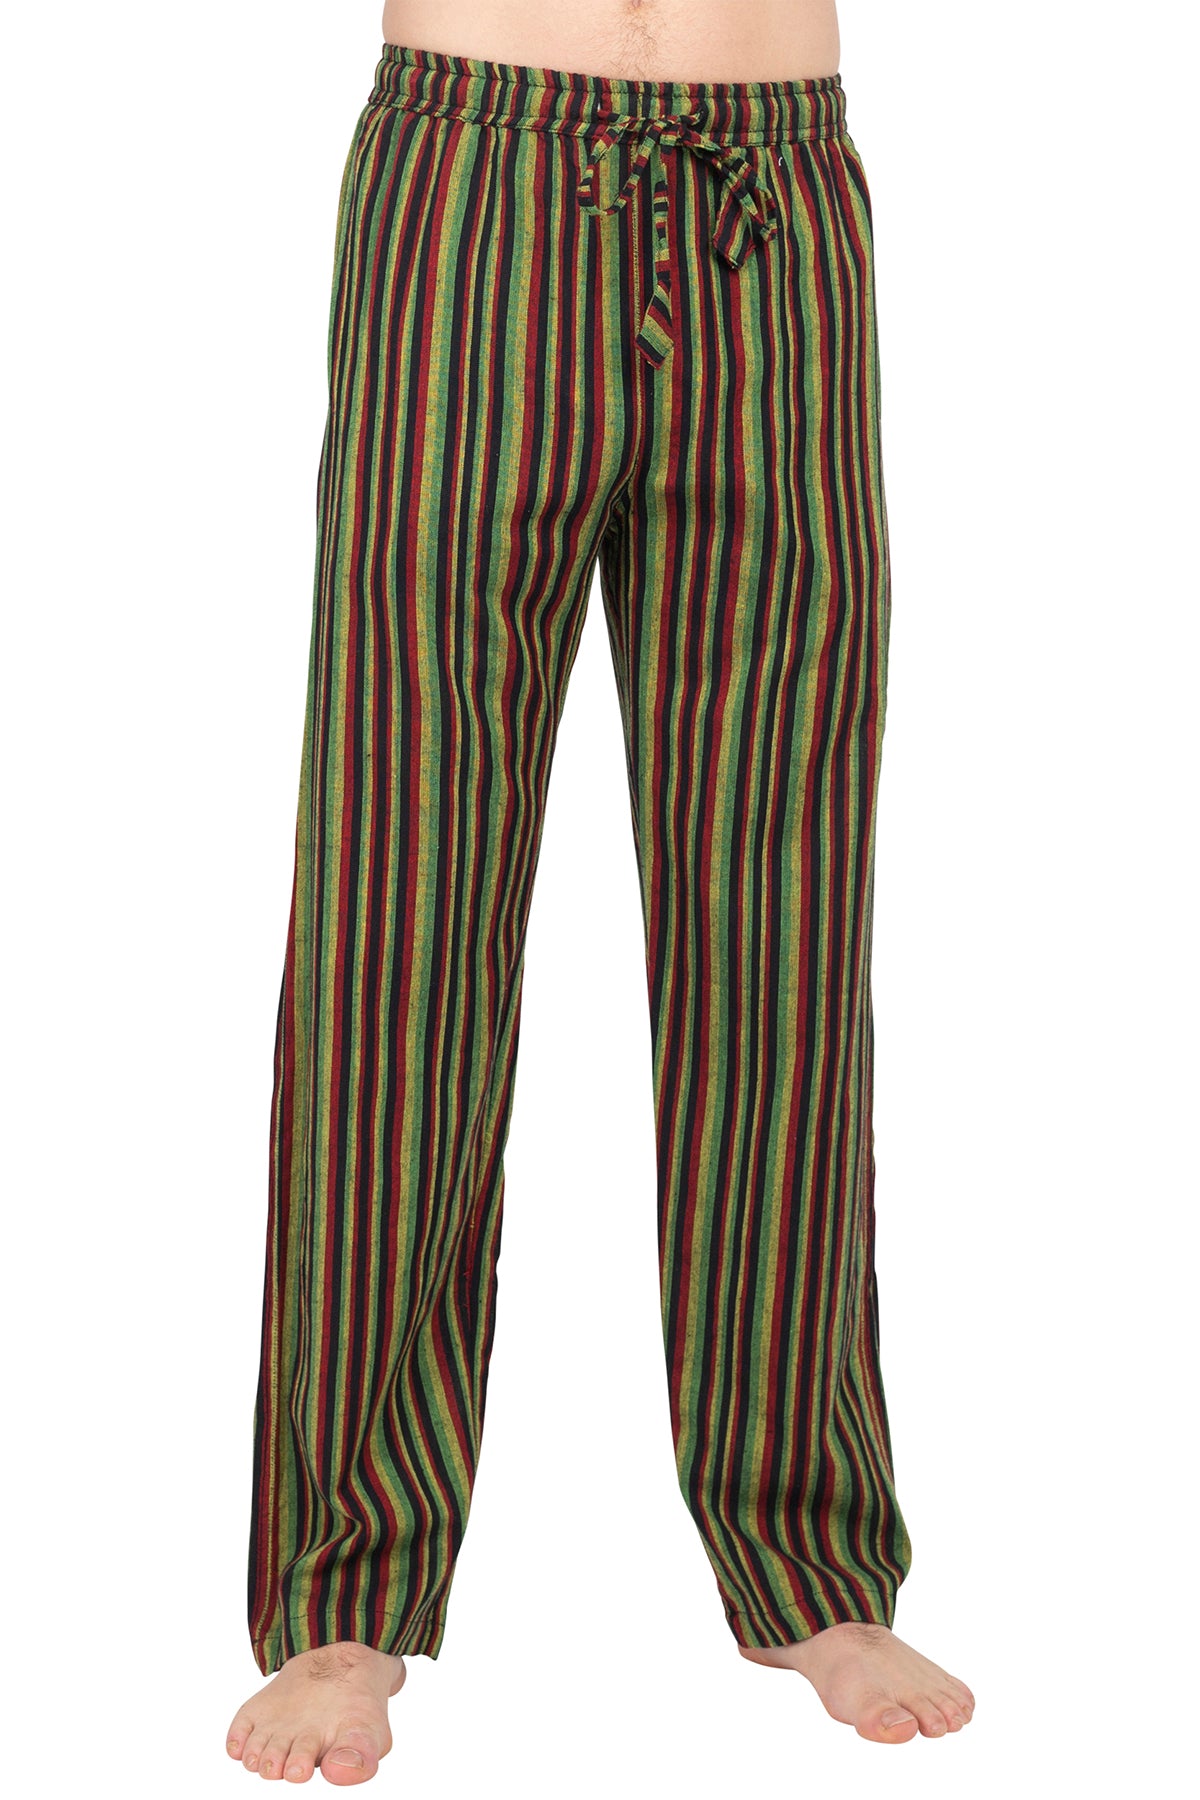 UniSex Drawstring Rasta Stripe Pants